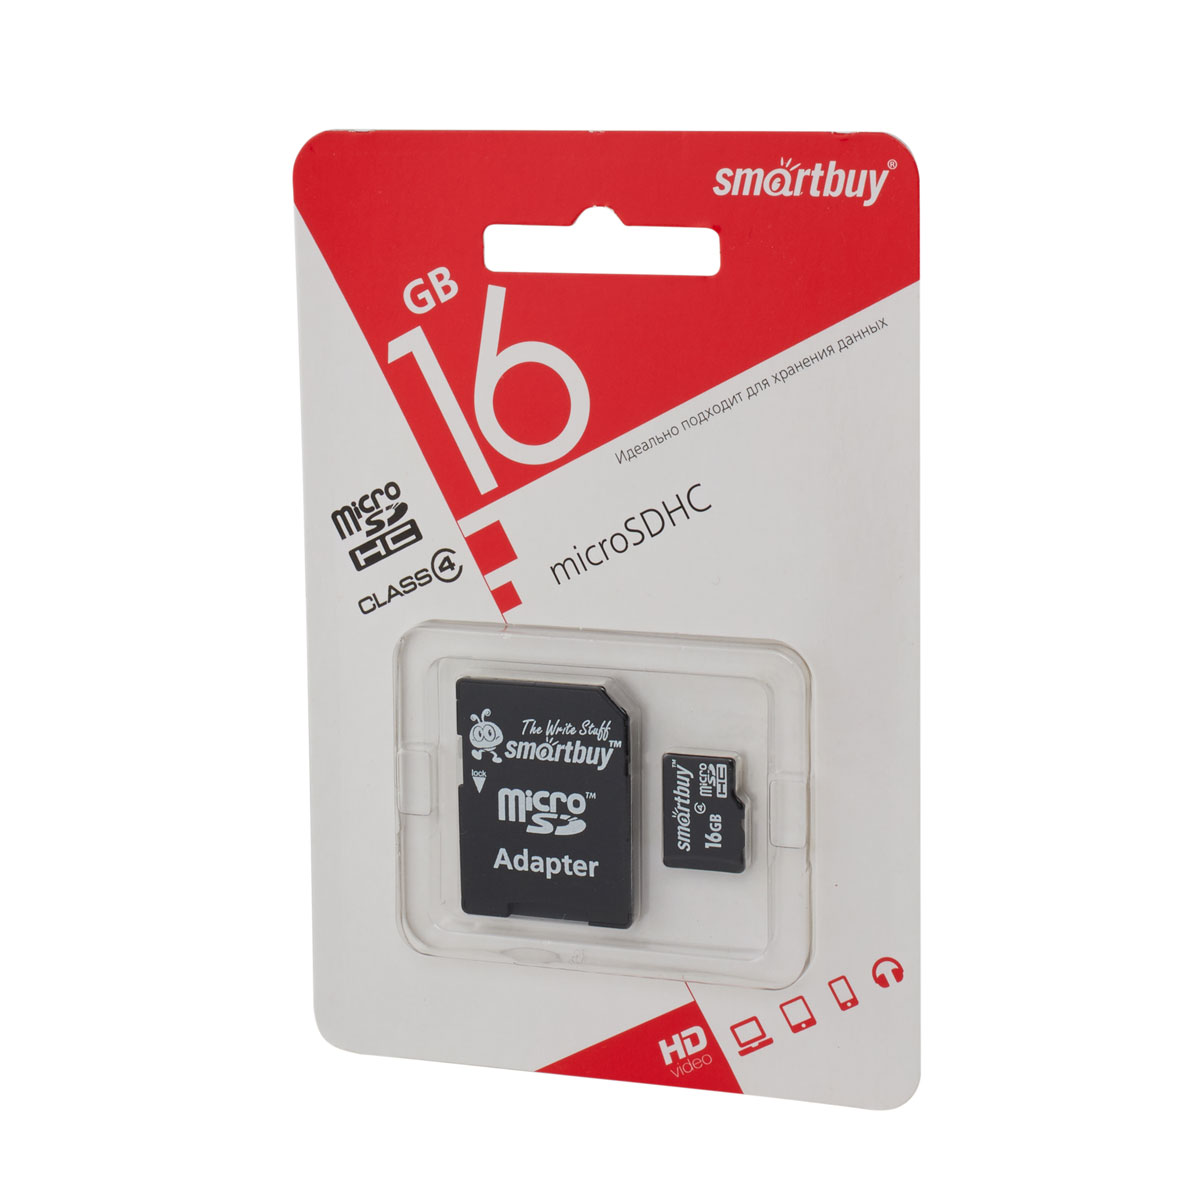 Micro SD 16GB Smart Buy class 4